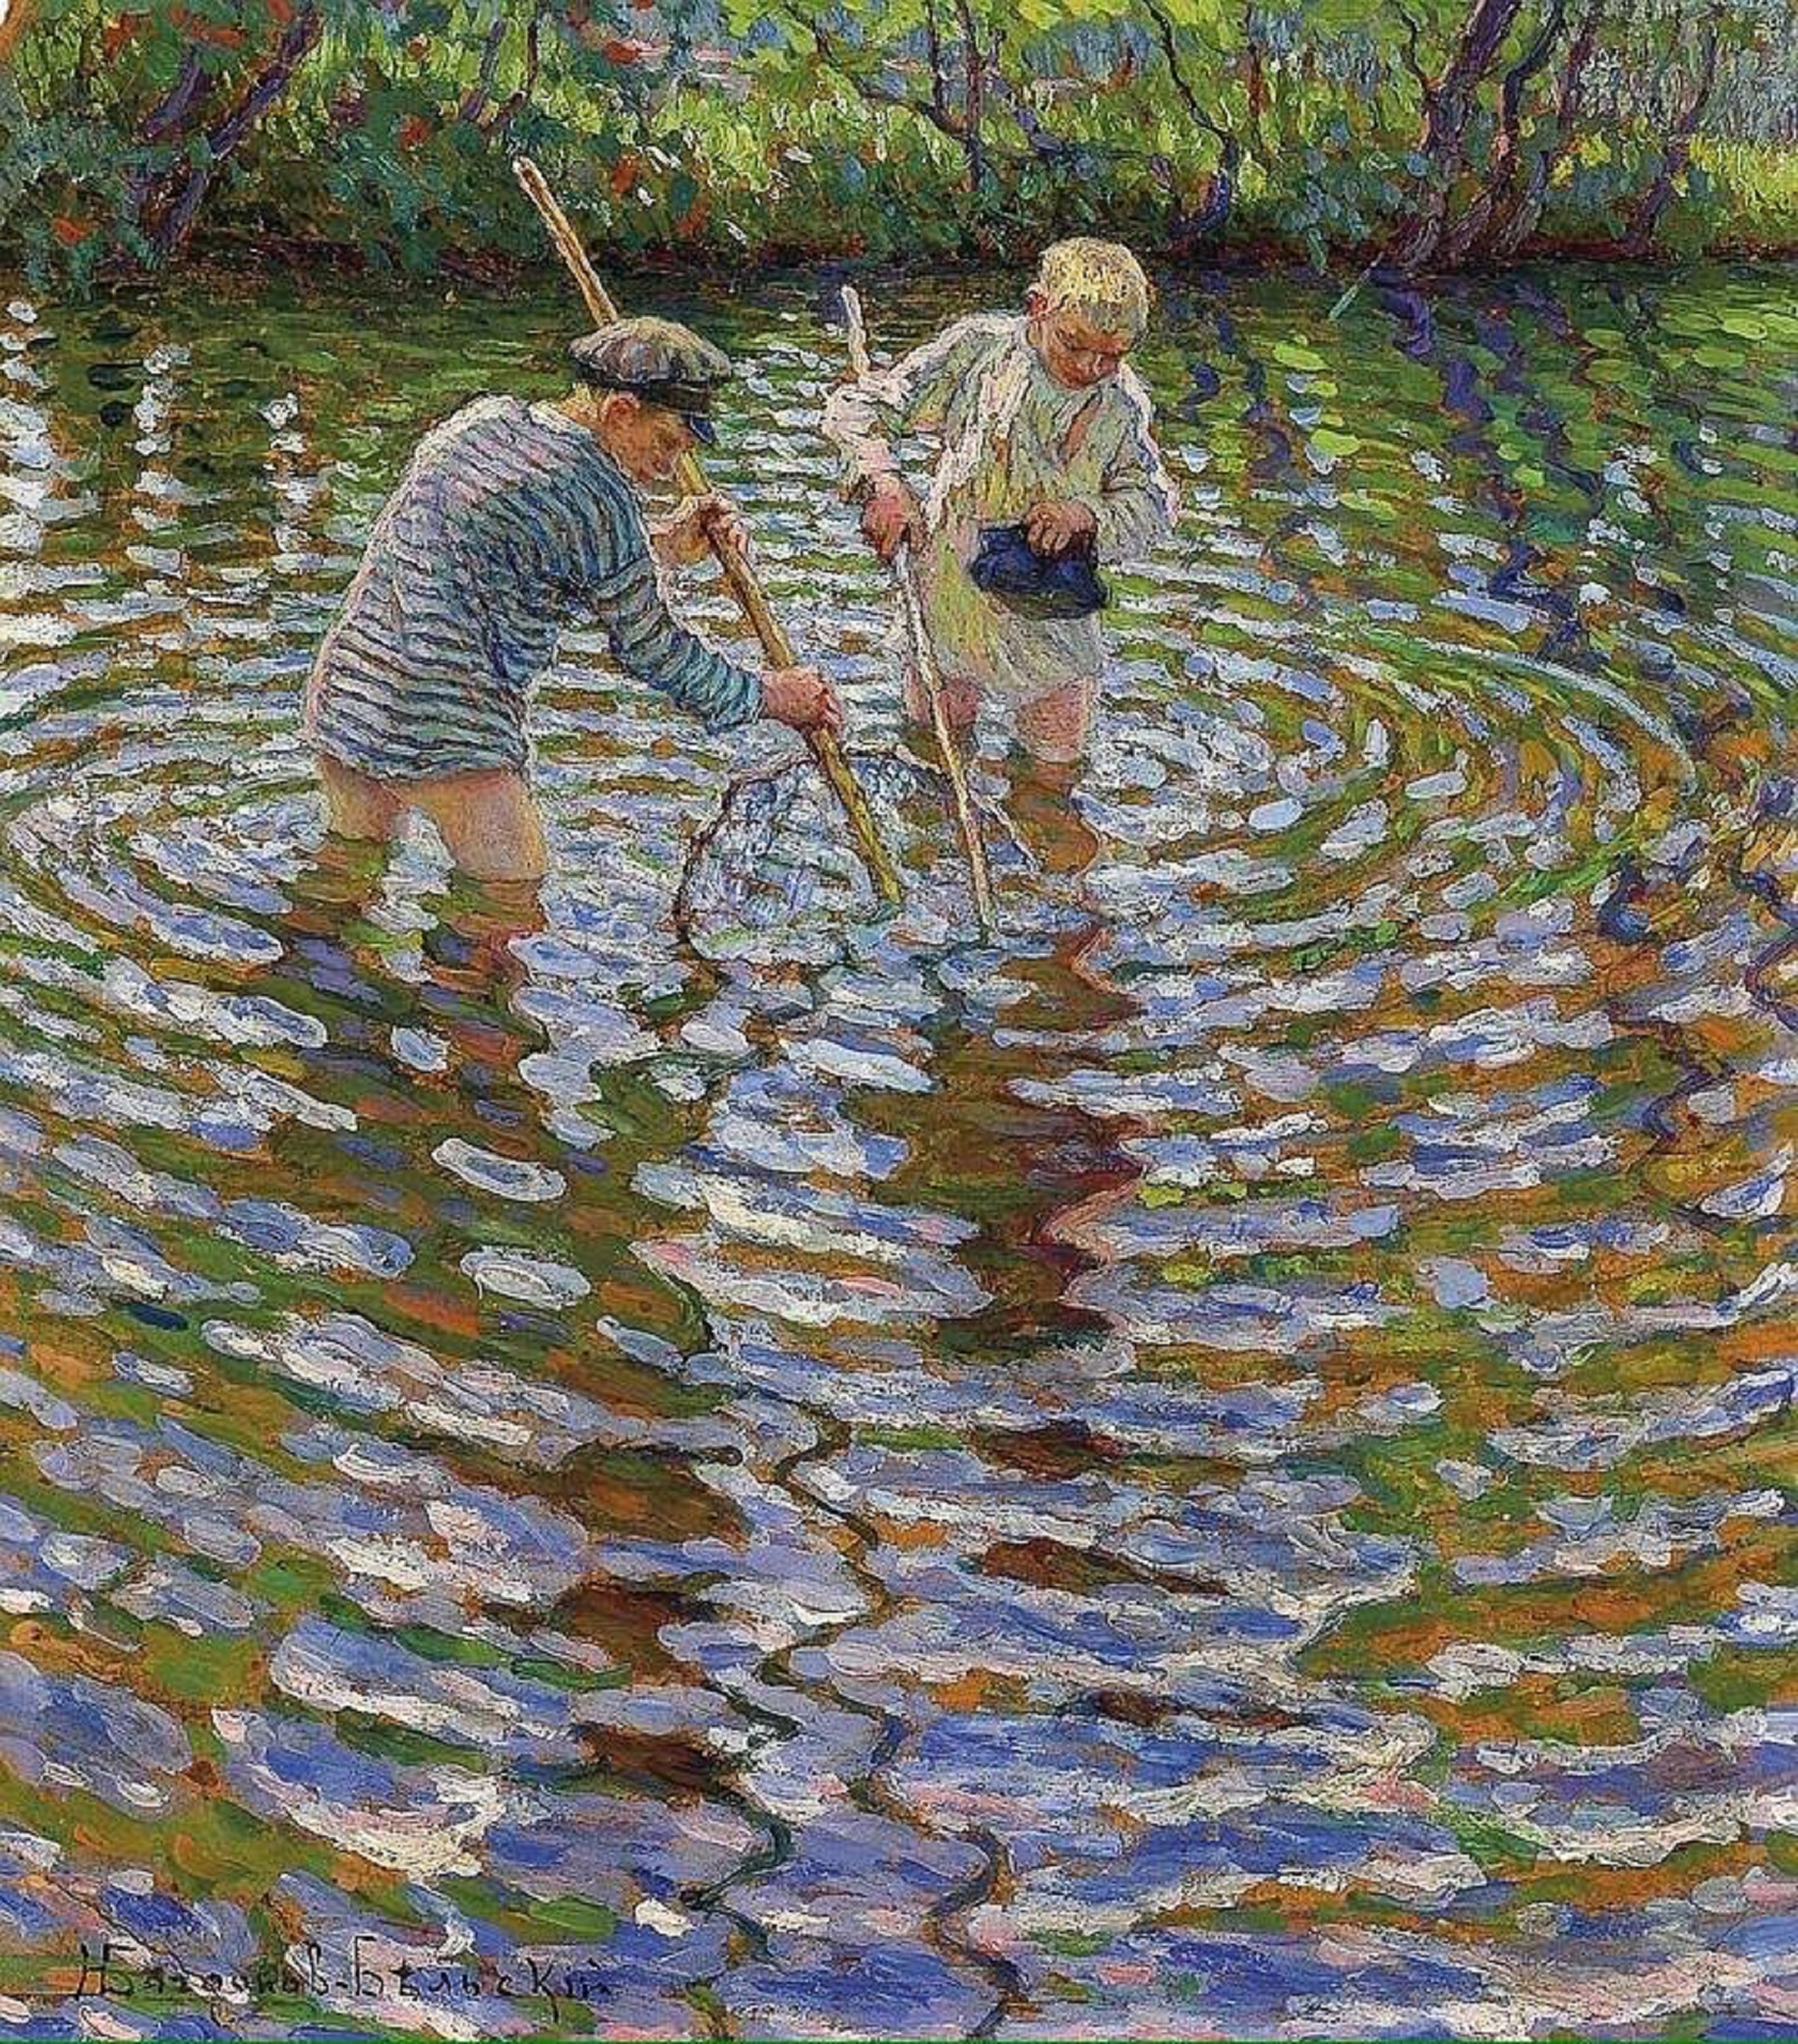 File:Boys fishing.jpg - Wikimedia Commons